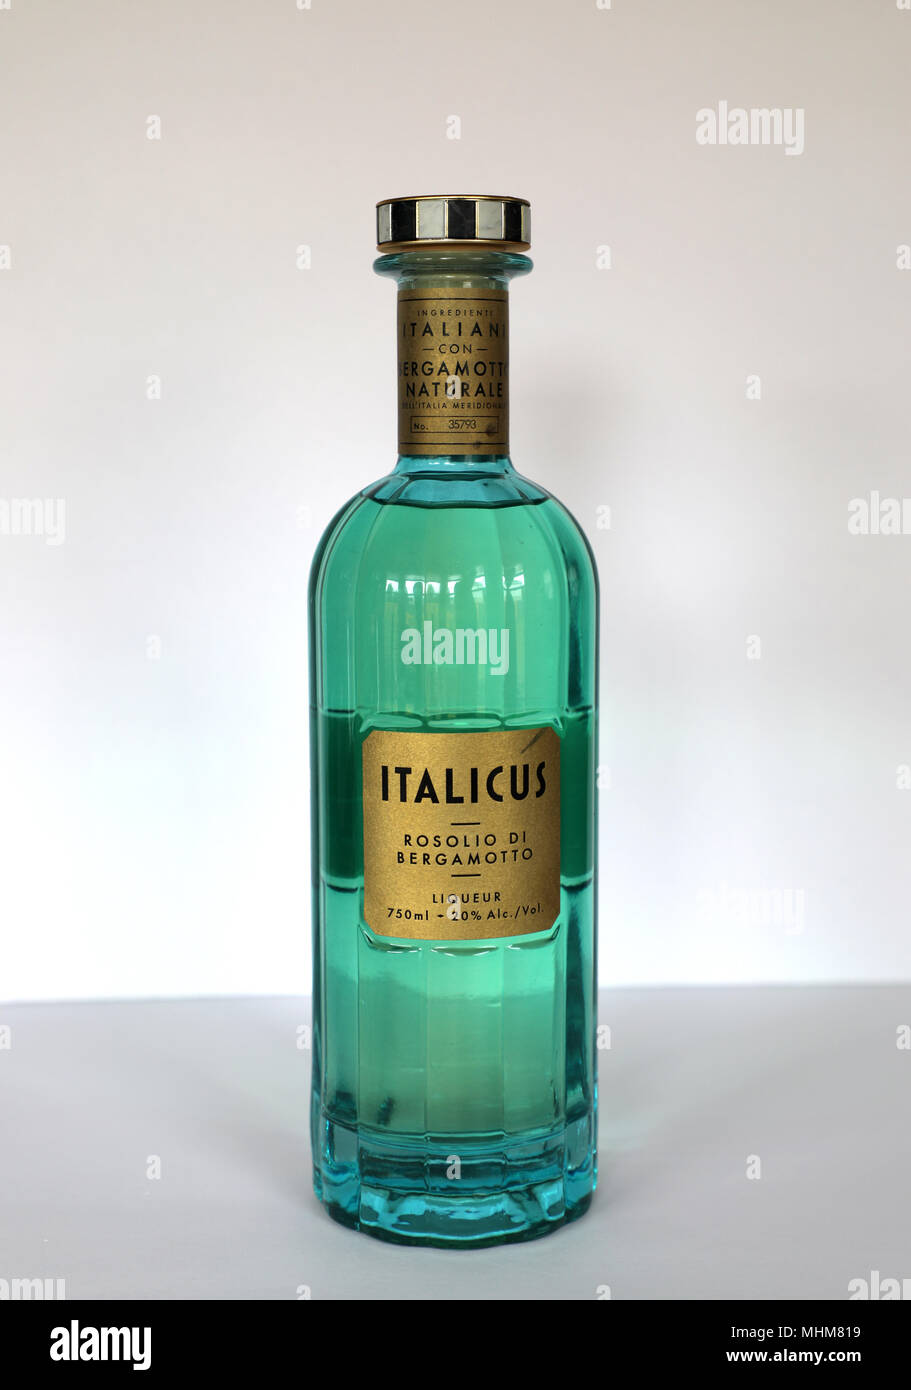 - 20% Rosolio on Background Bergamotto Photo White Alcohol Bottle Italicus Alamy Stock Di